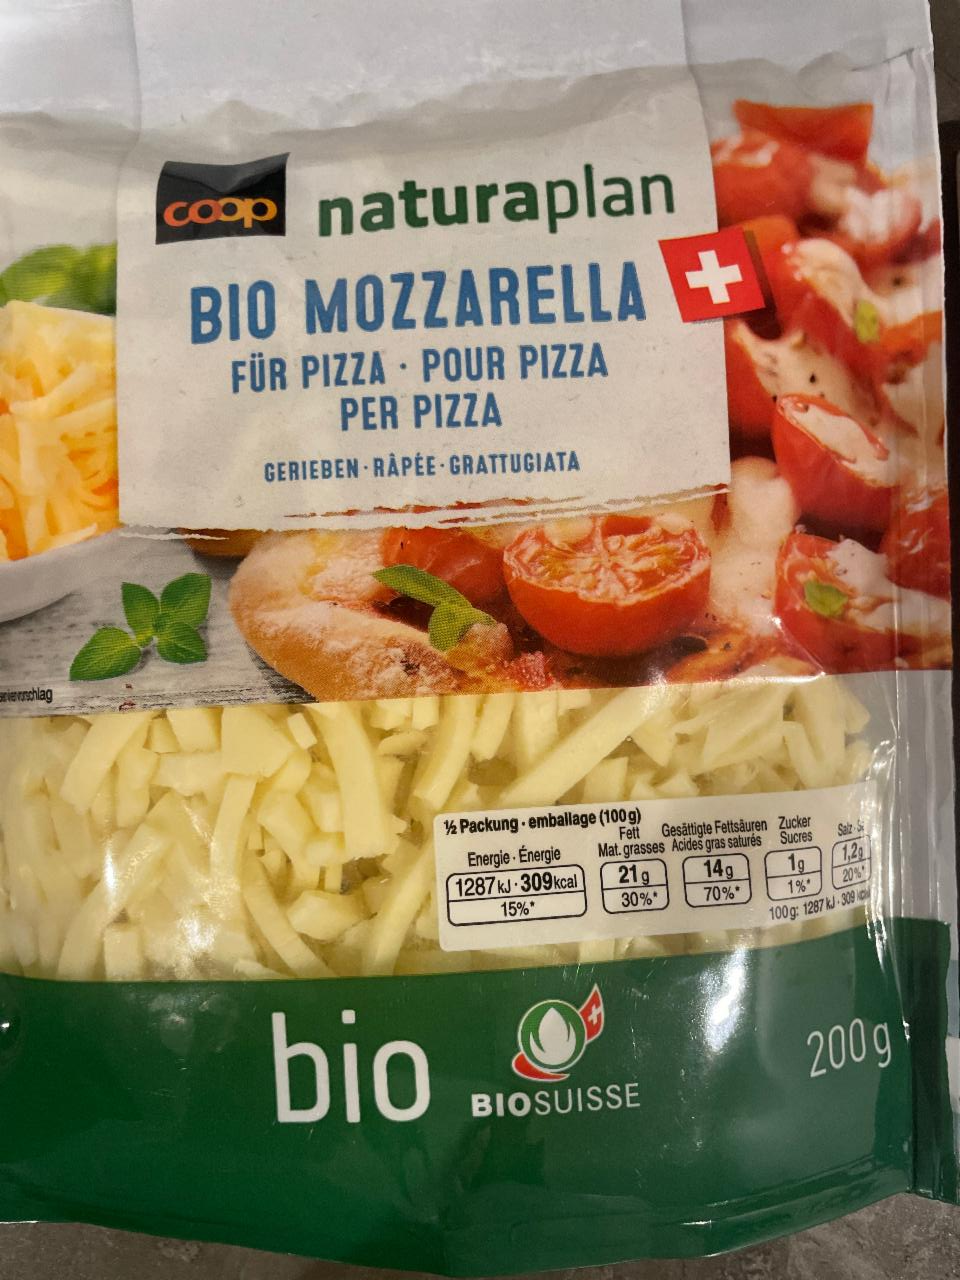 Fotografie - Bio Mozzarella für Pizza Coop Naturaplan